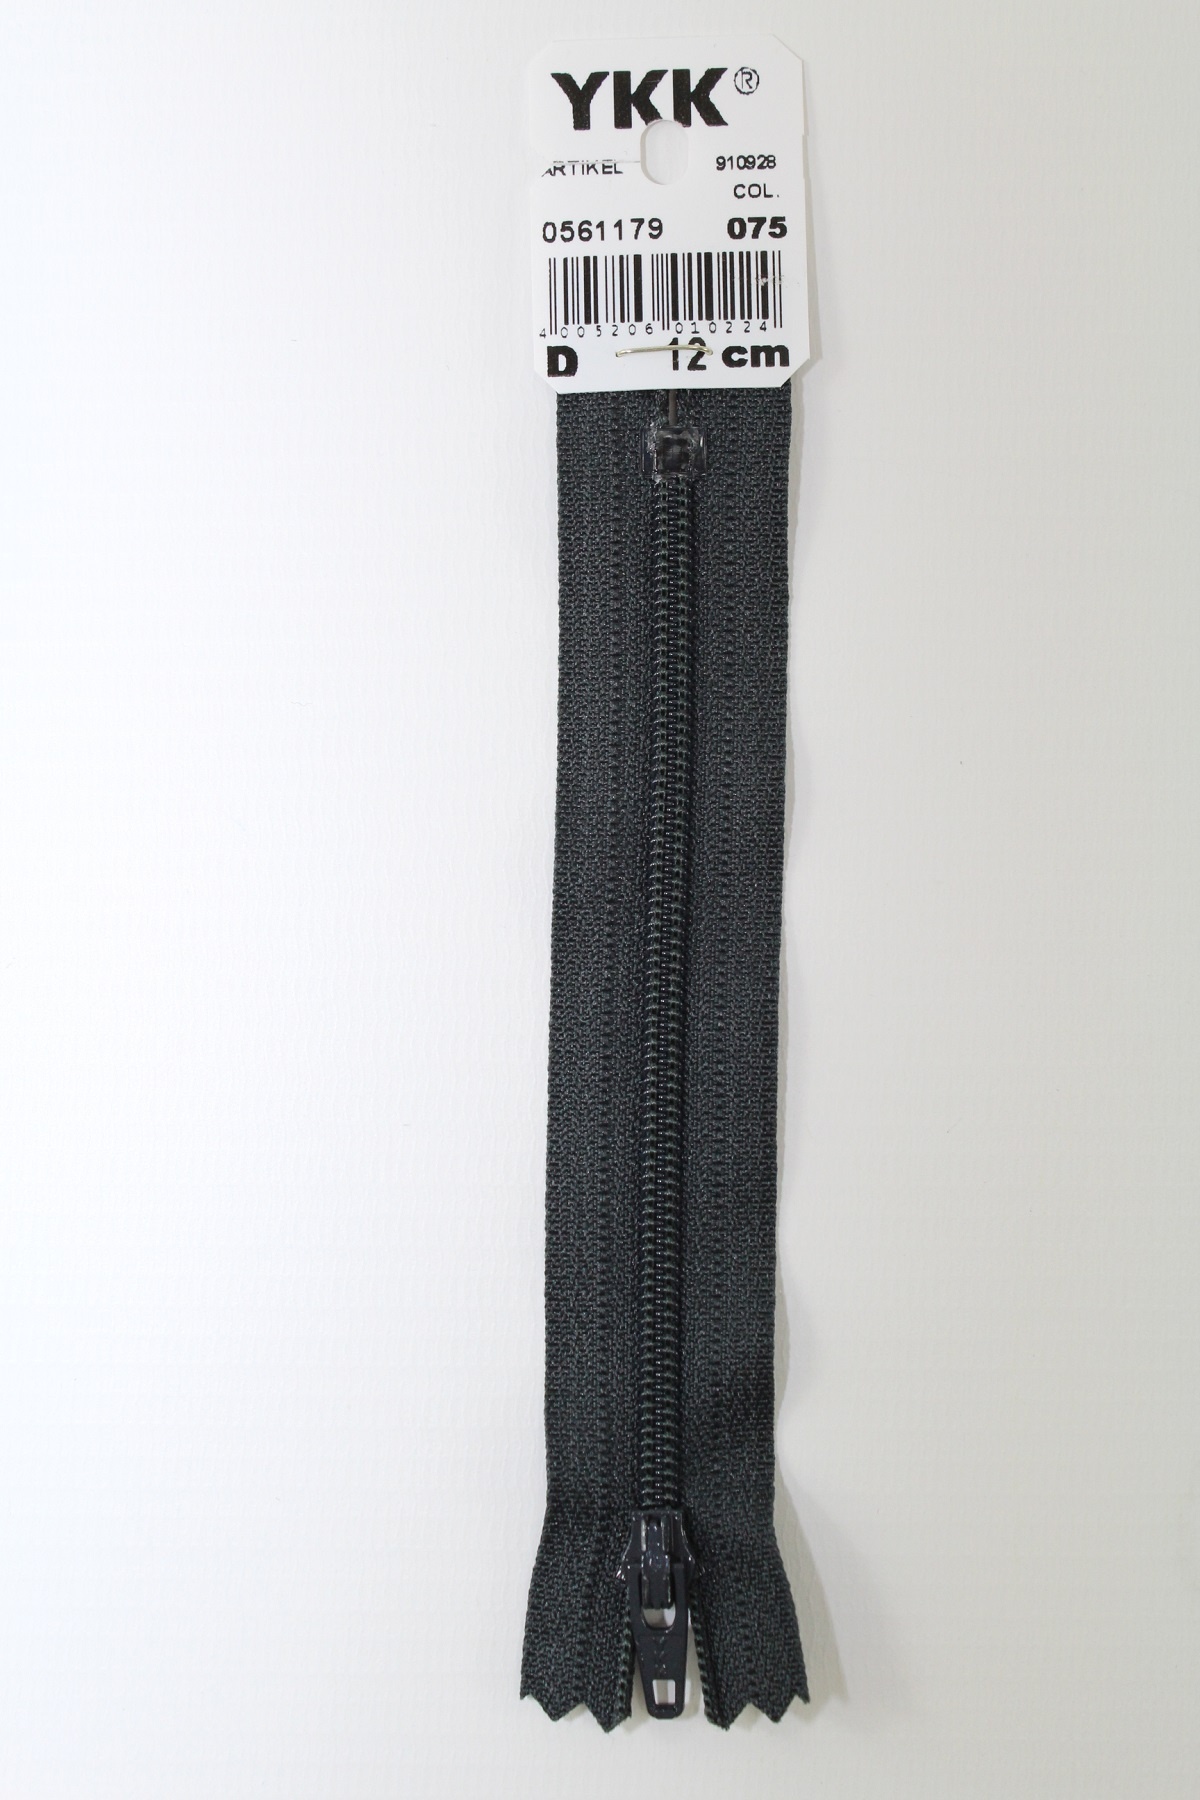 YKK-Reissverschluss 12cm-60cm, nicht teilbar, kohle